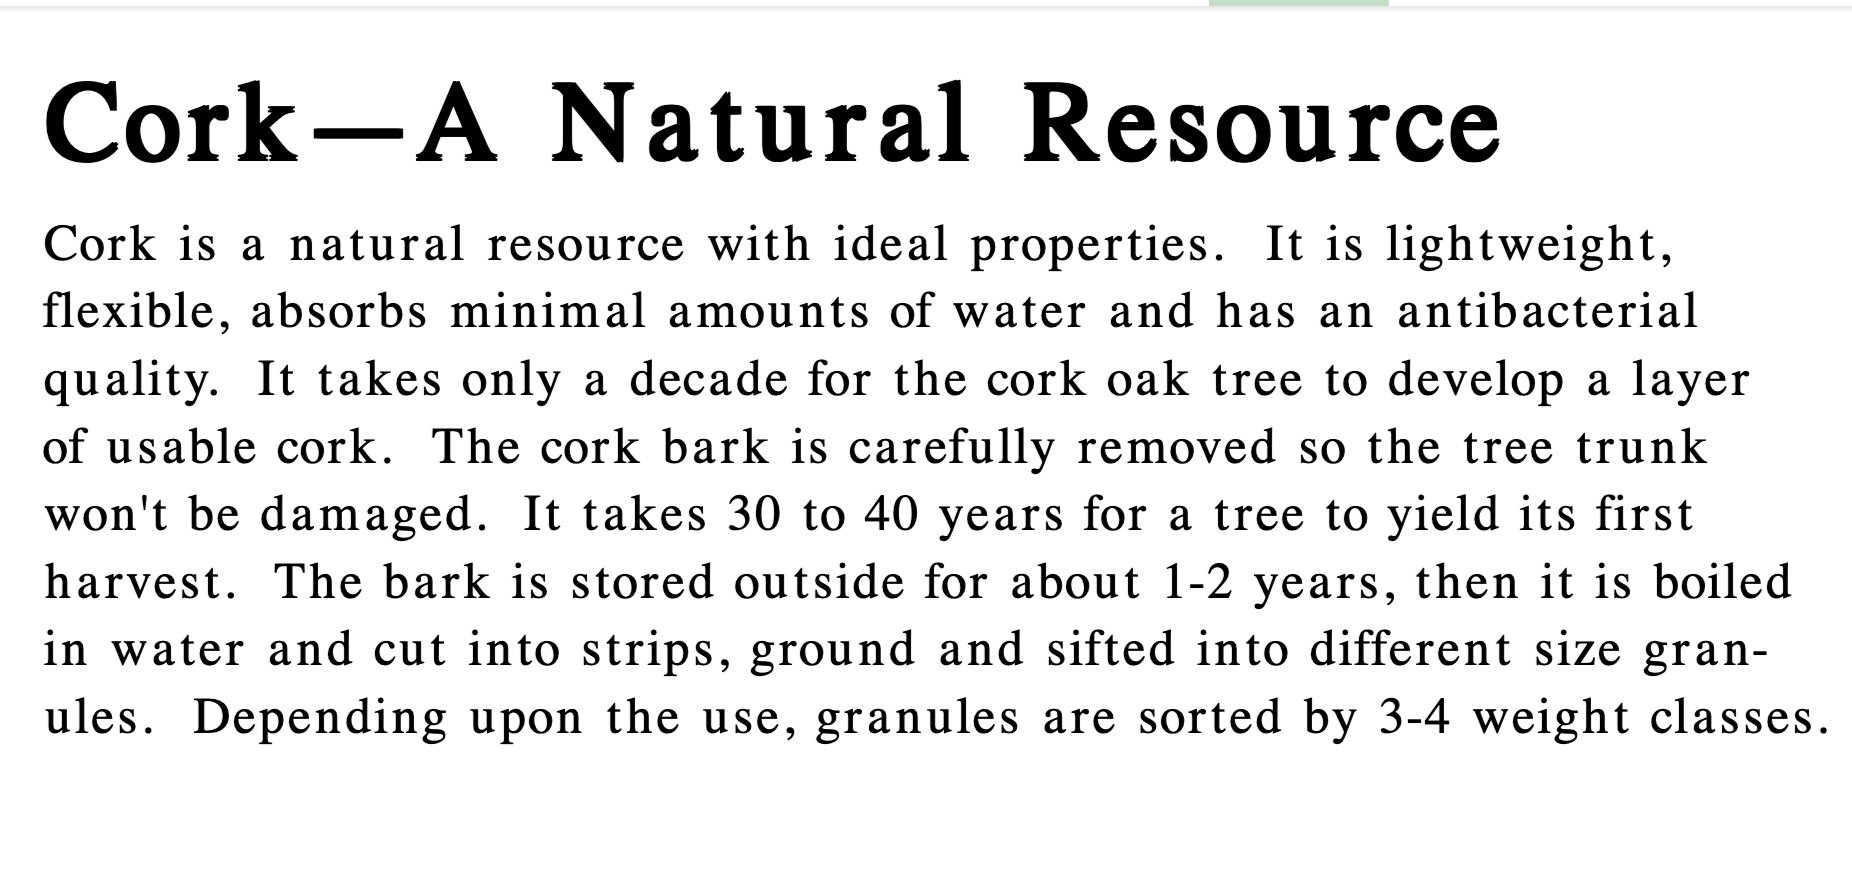 Cork - A Natural Resource